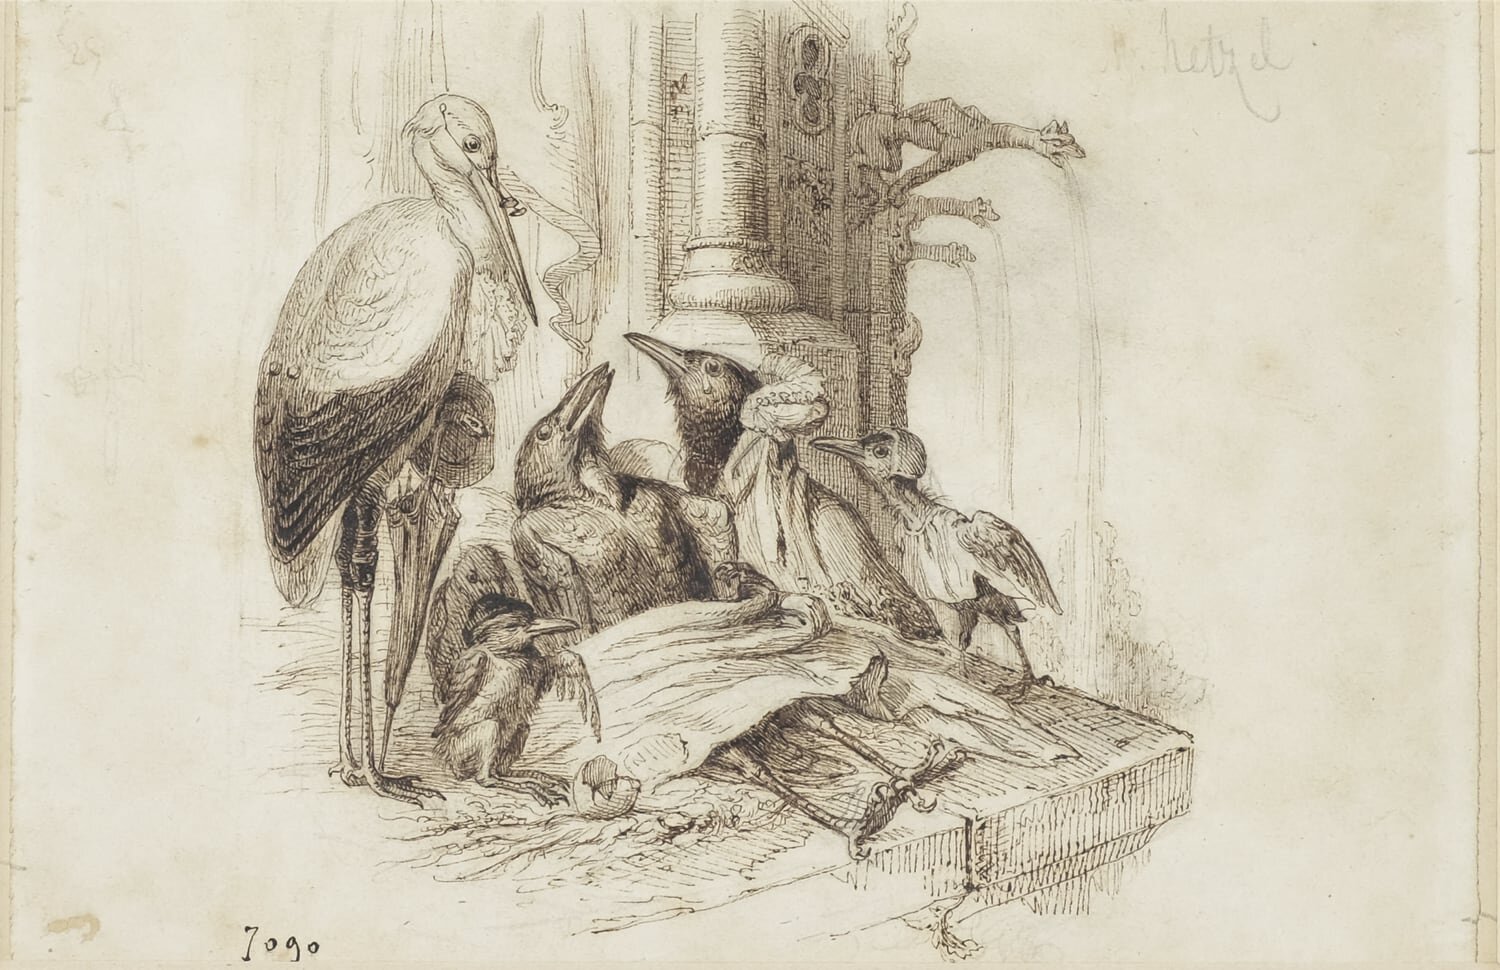  One of Grandville’s drawings for his  Scènes de la vie privée and publique des animaux , out of a corpus of 35 pen drawings in total [no. 313] 